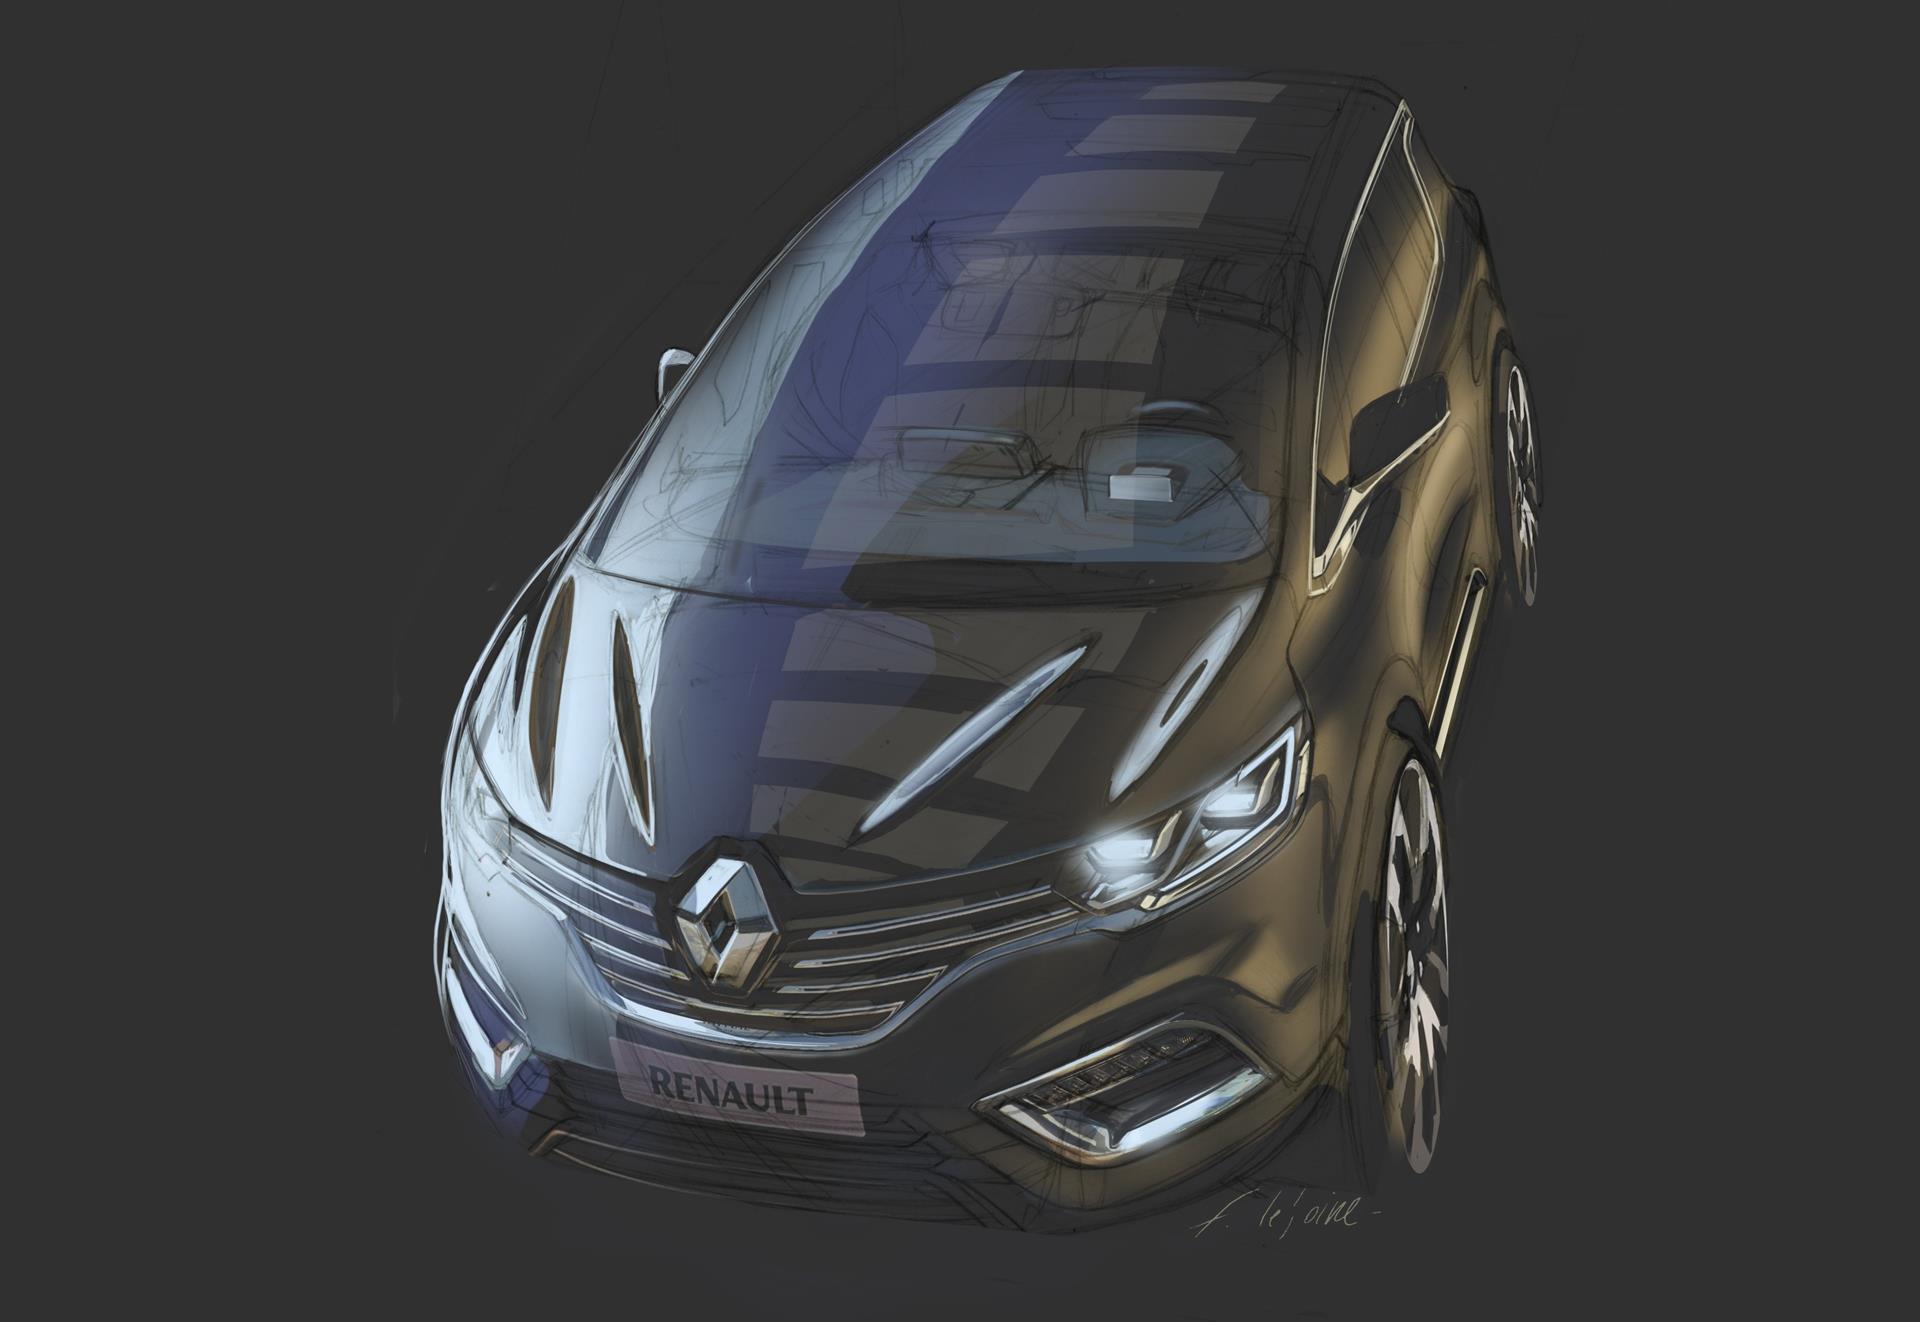 2015 Renault Espace